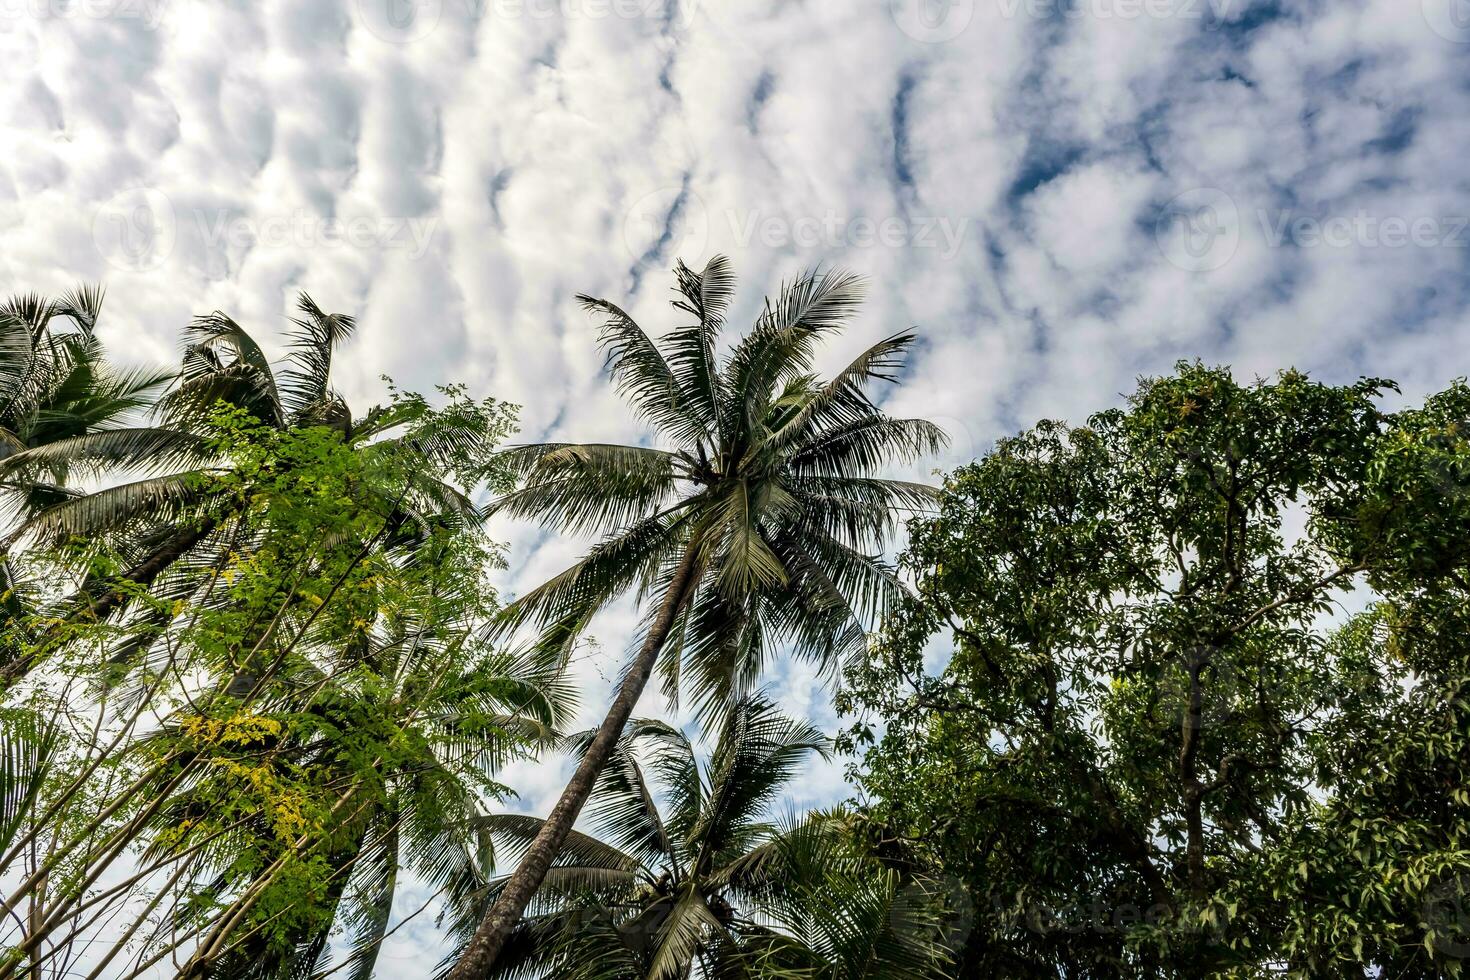 kokosnoot bomen palmen tegen de blauw lucht van Indië foto